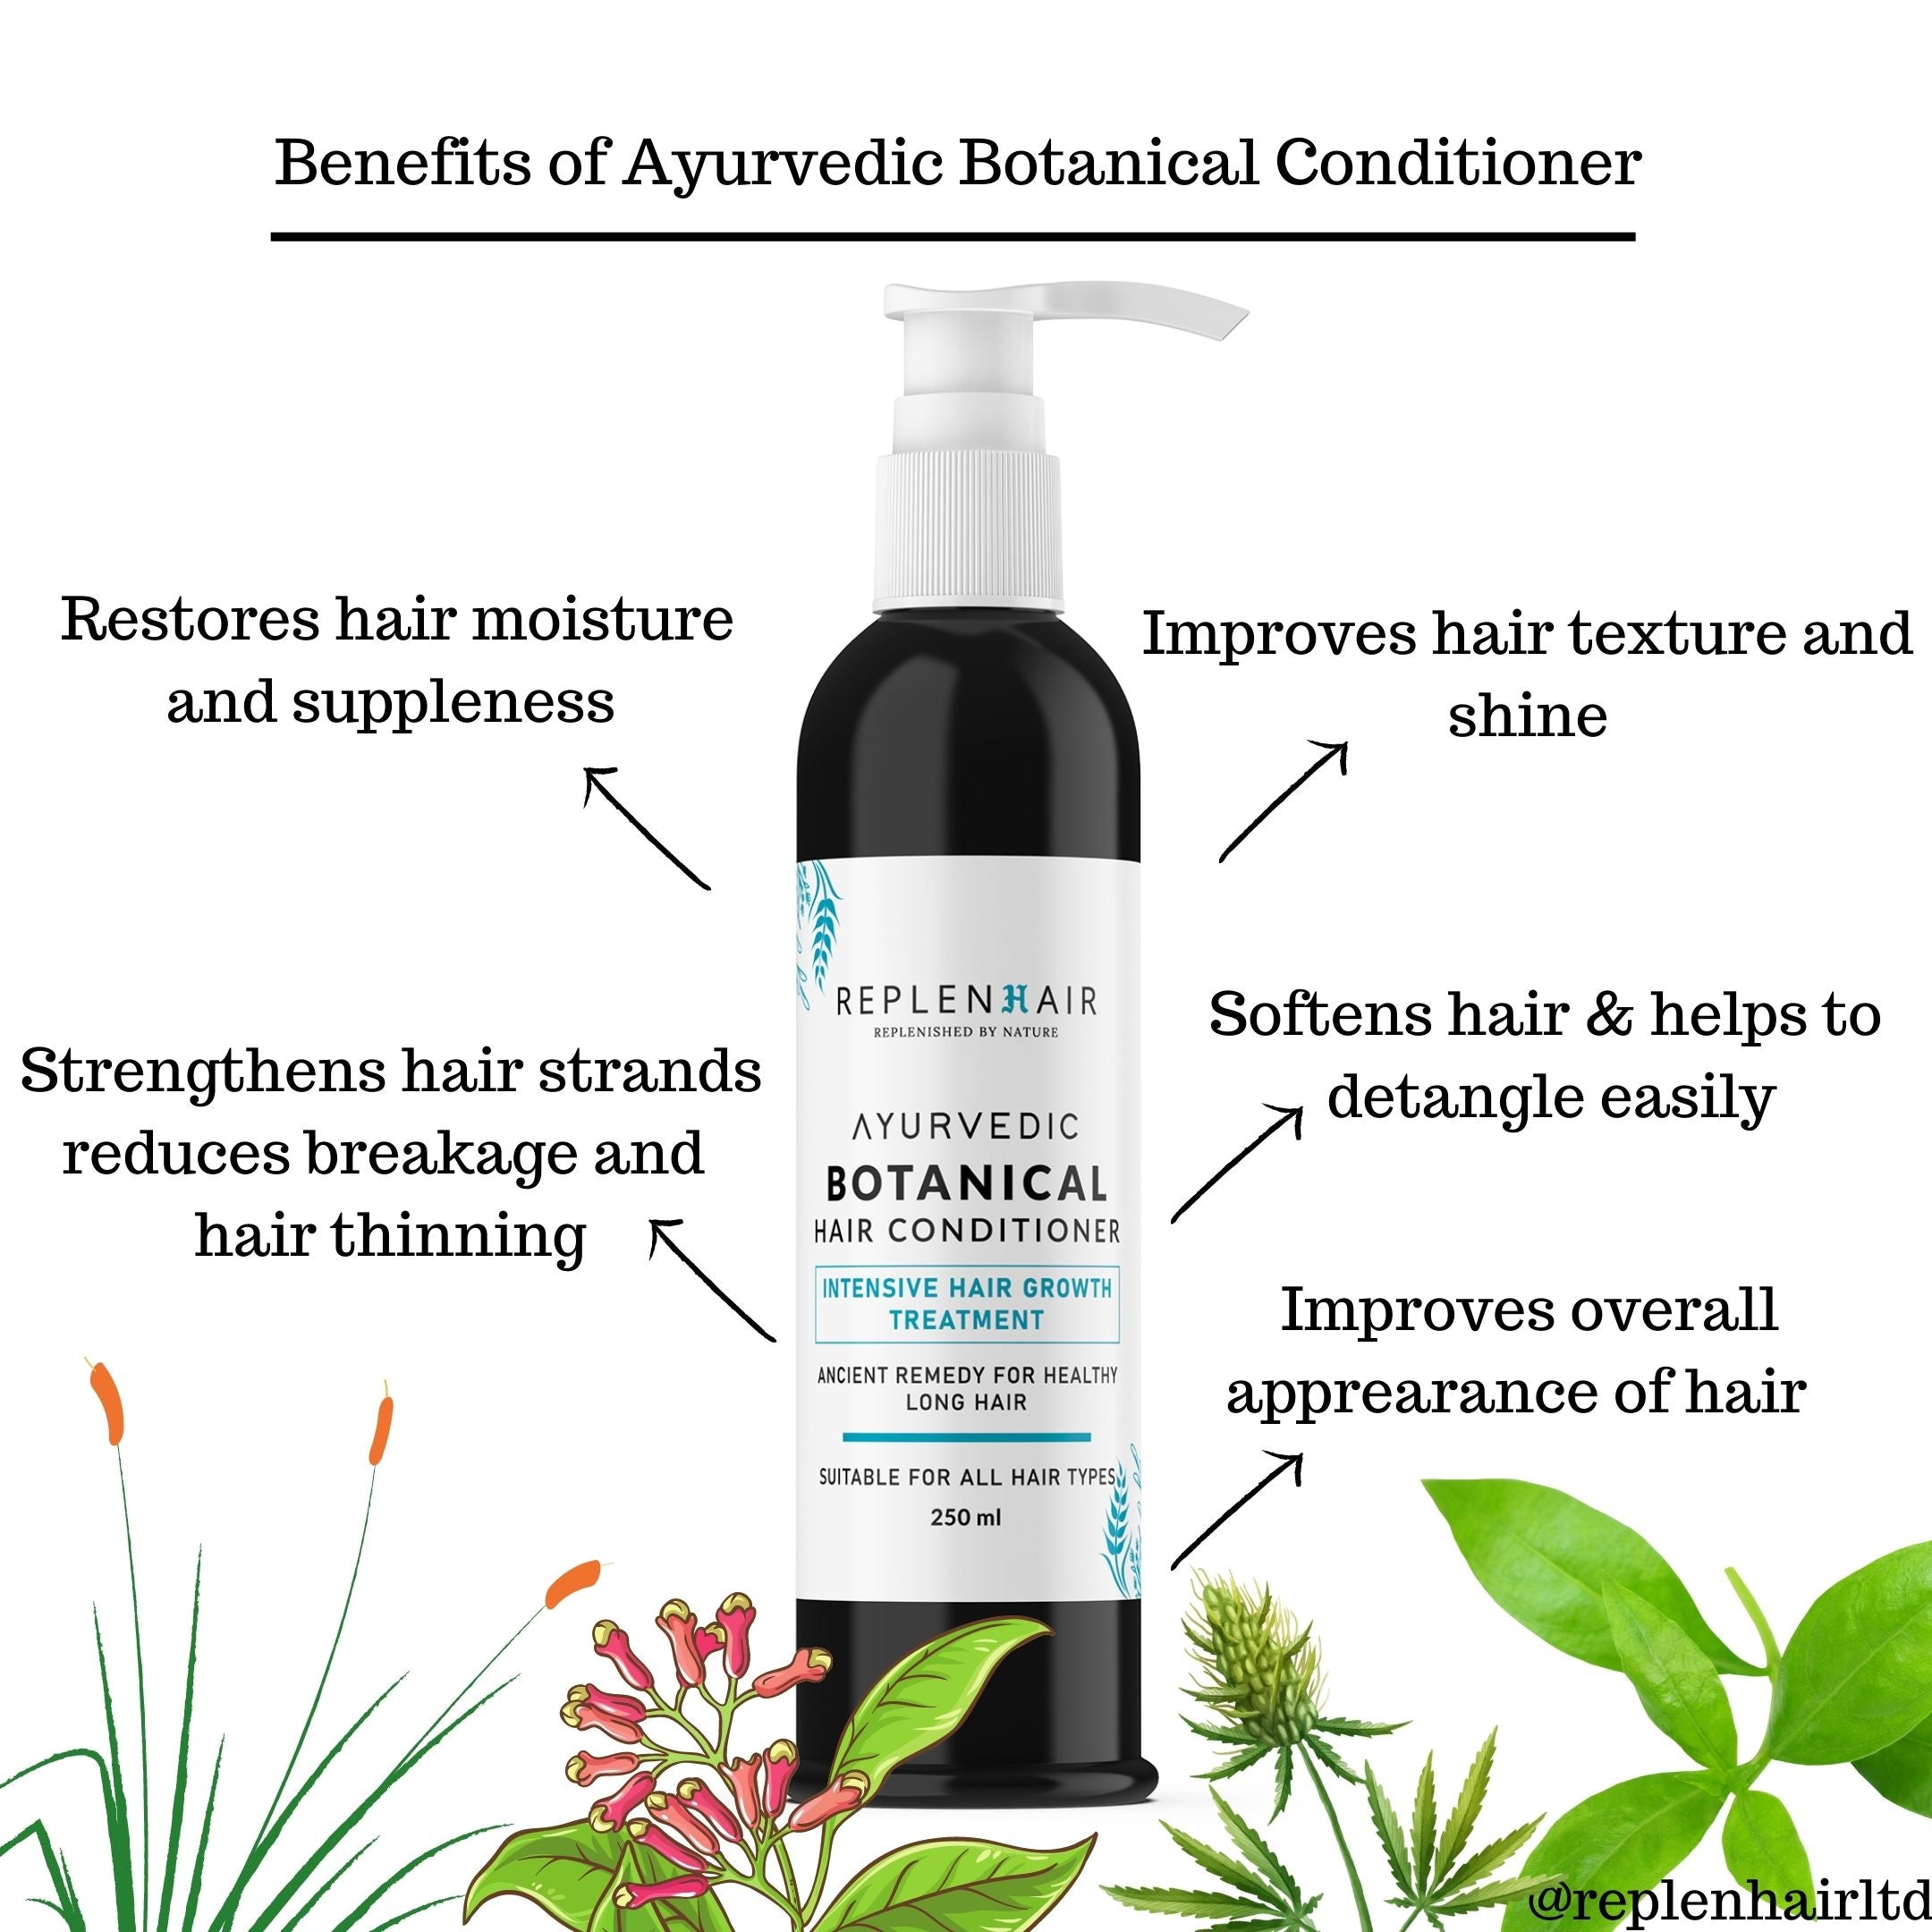 Ayurvedic Botanical Hair Conditioner